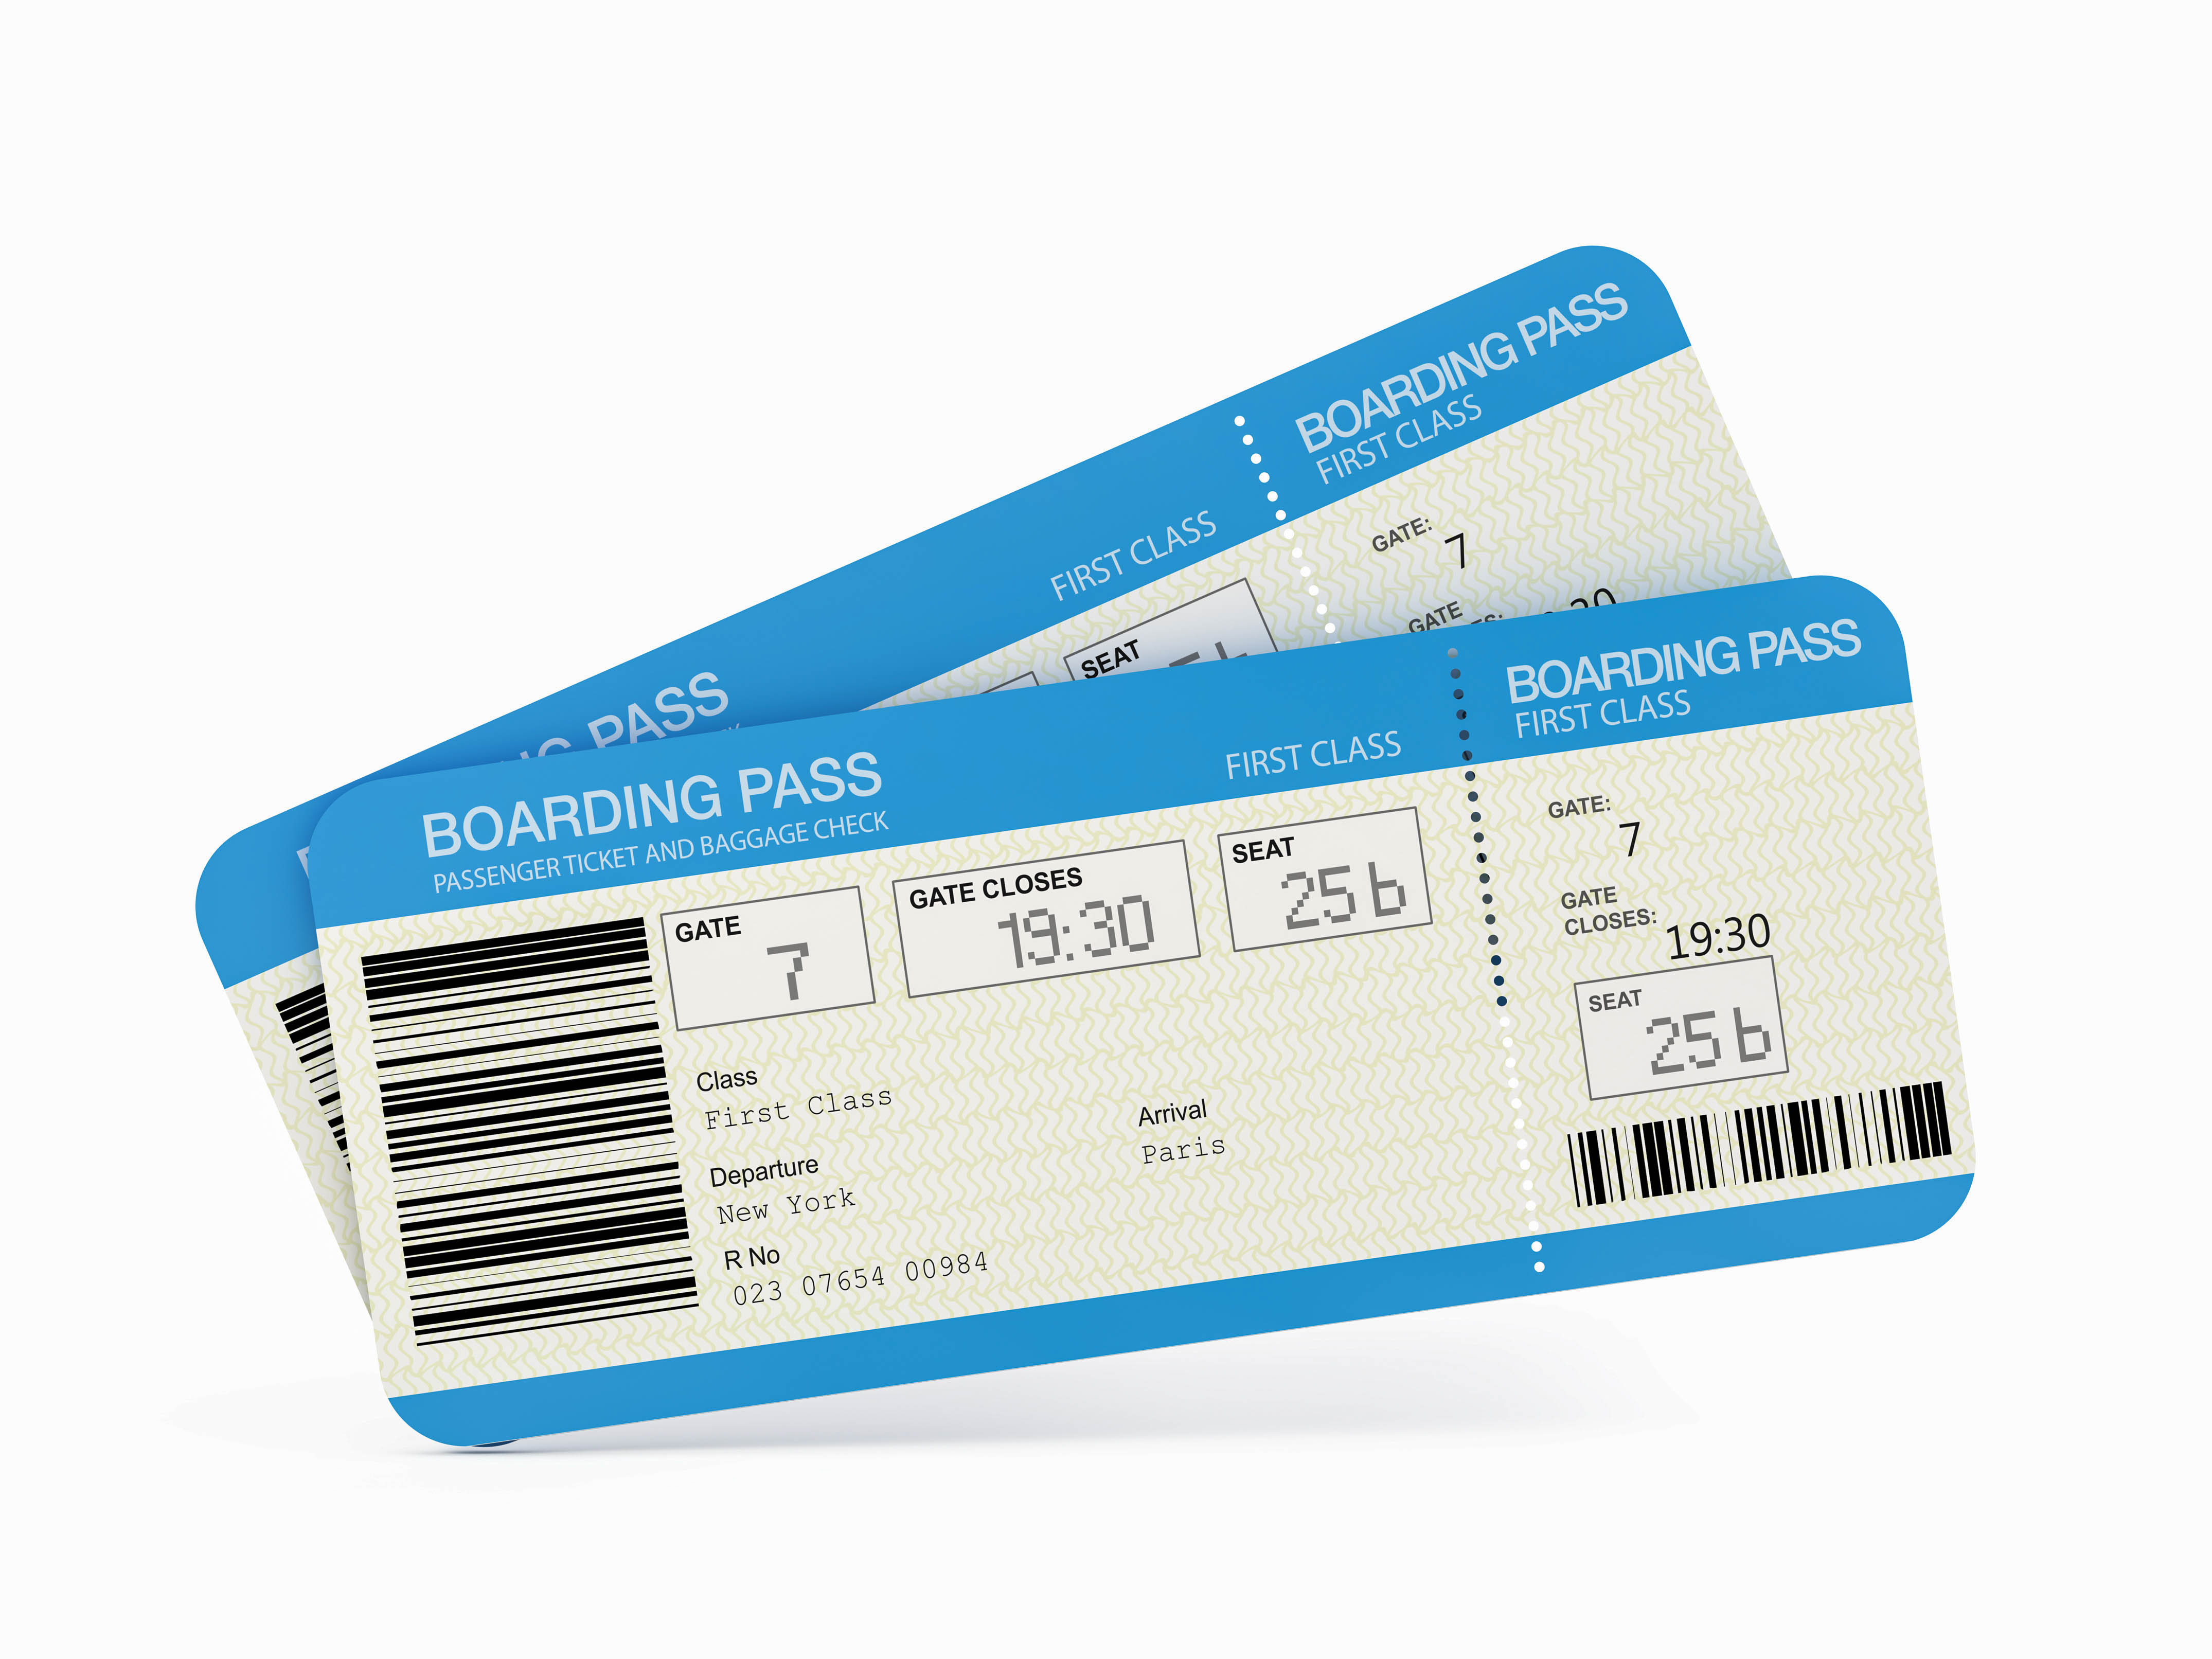 Nunca publiques tu boarding pass